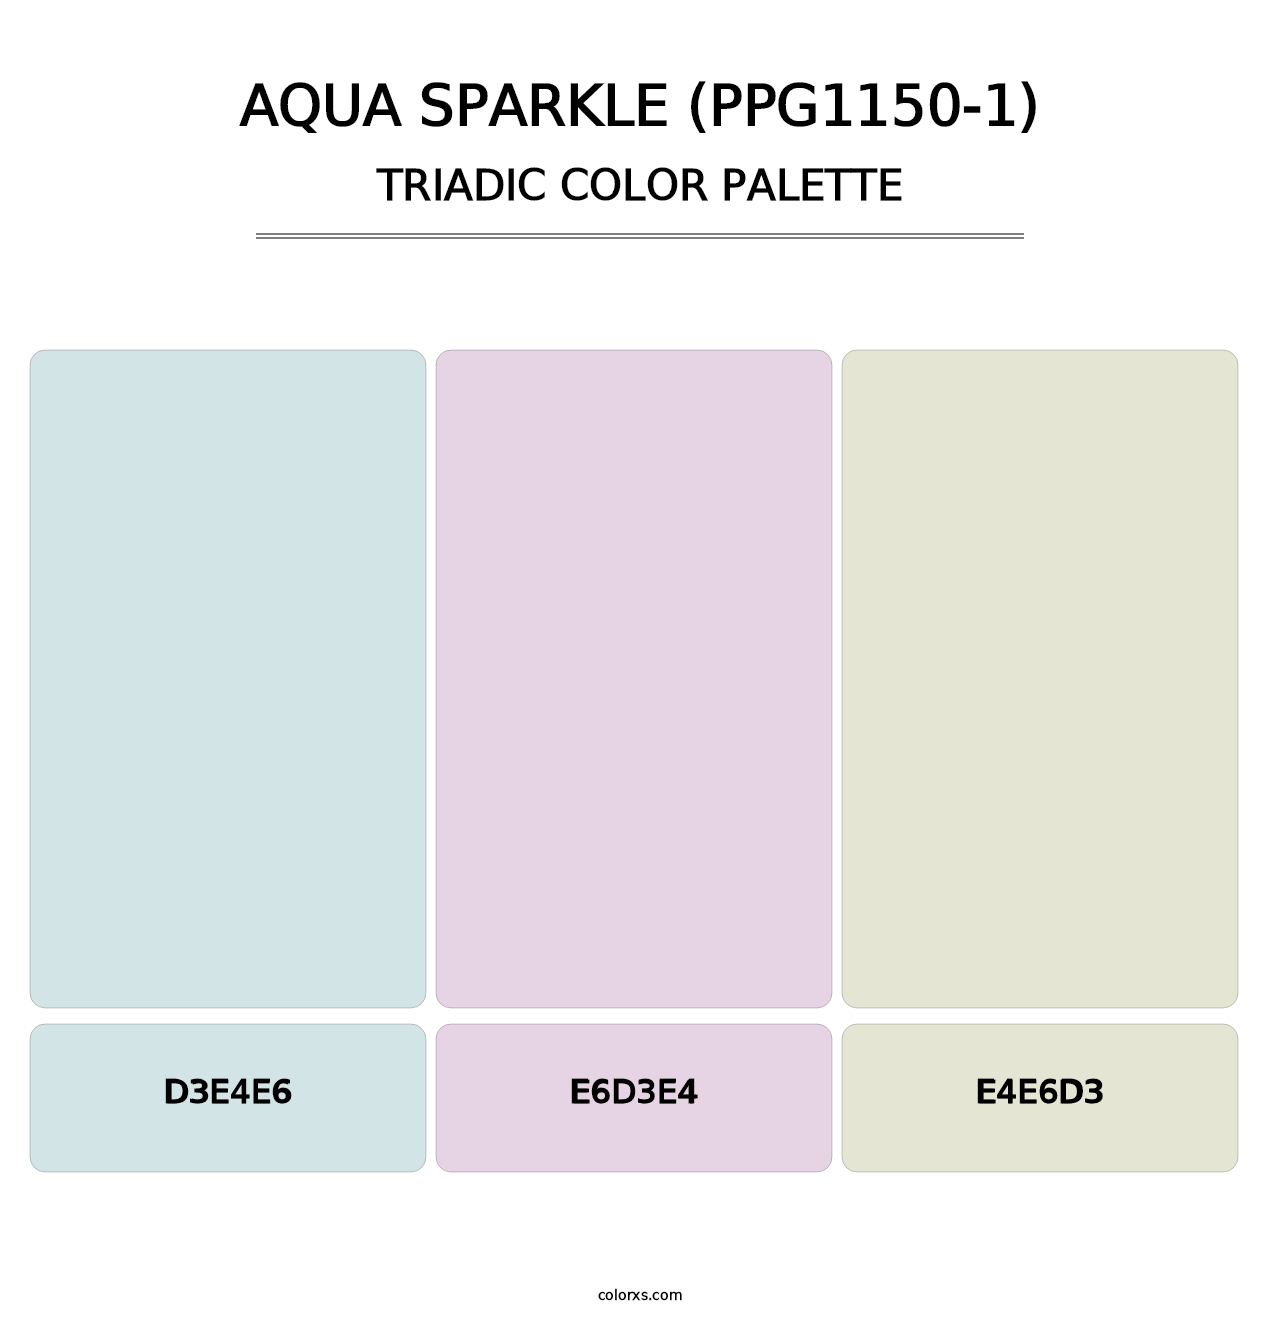 Aqua Sparkle (PPG1150-1) - Triadic Color Palette